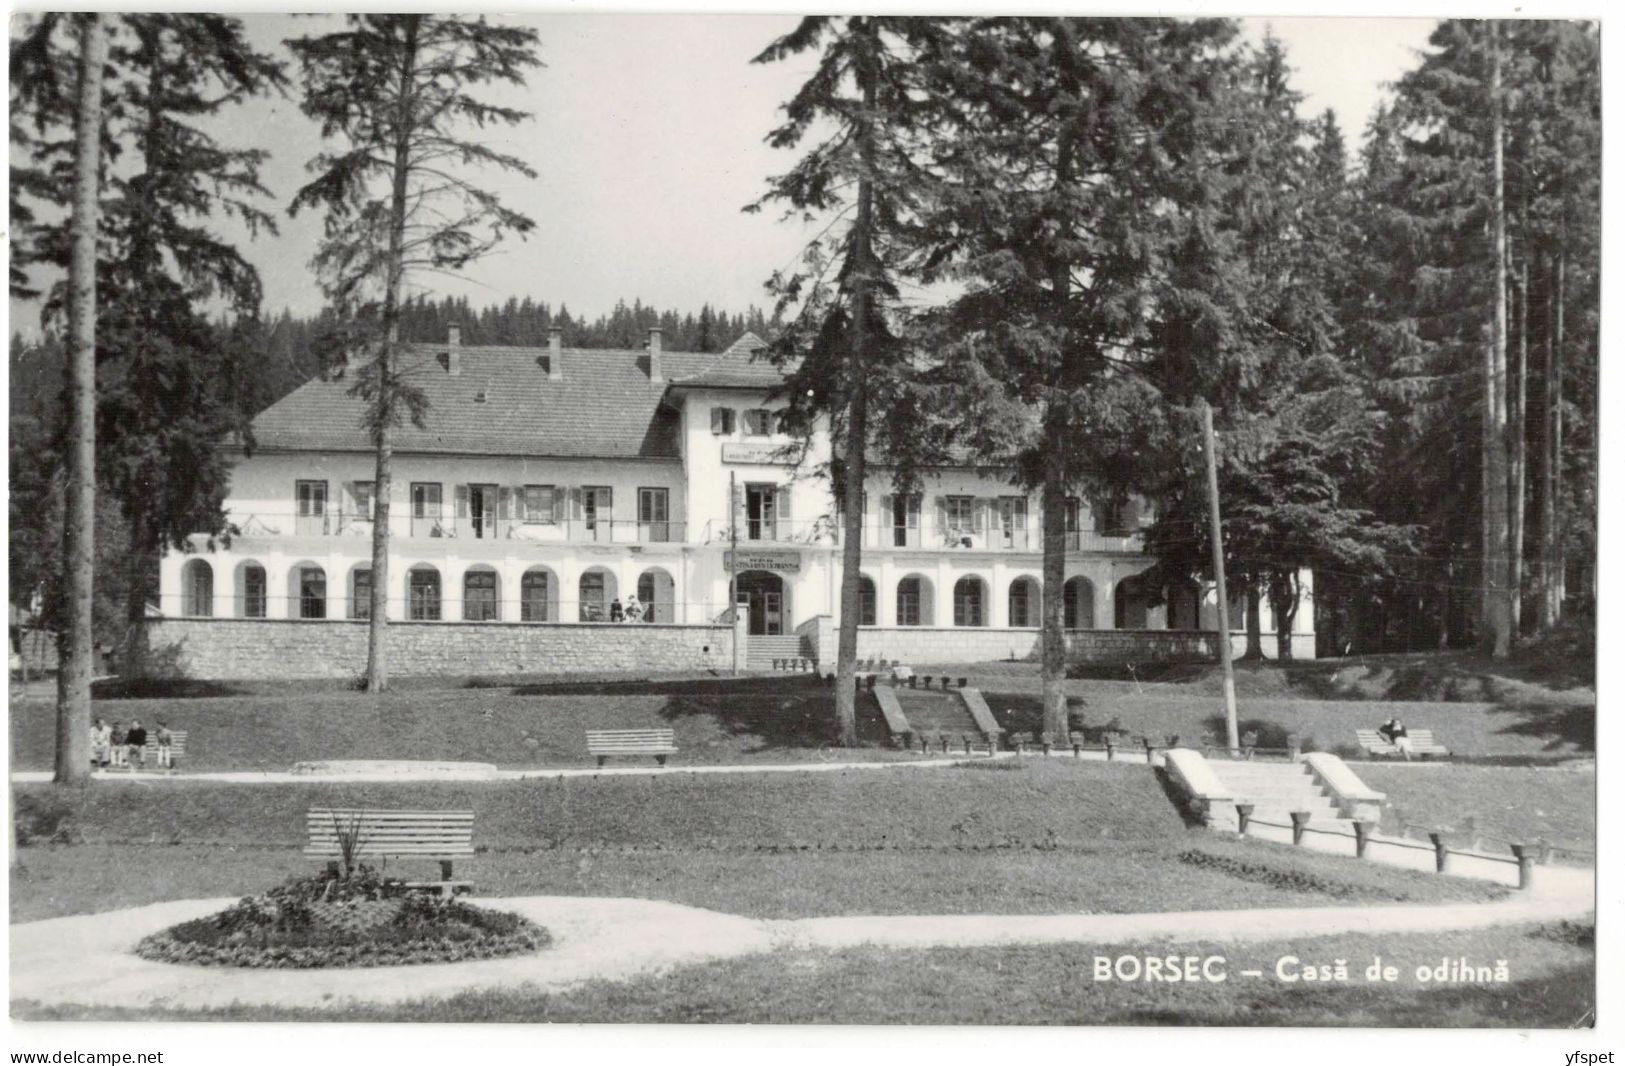 Borsec Health Resort - Rest House - Romania